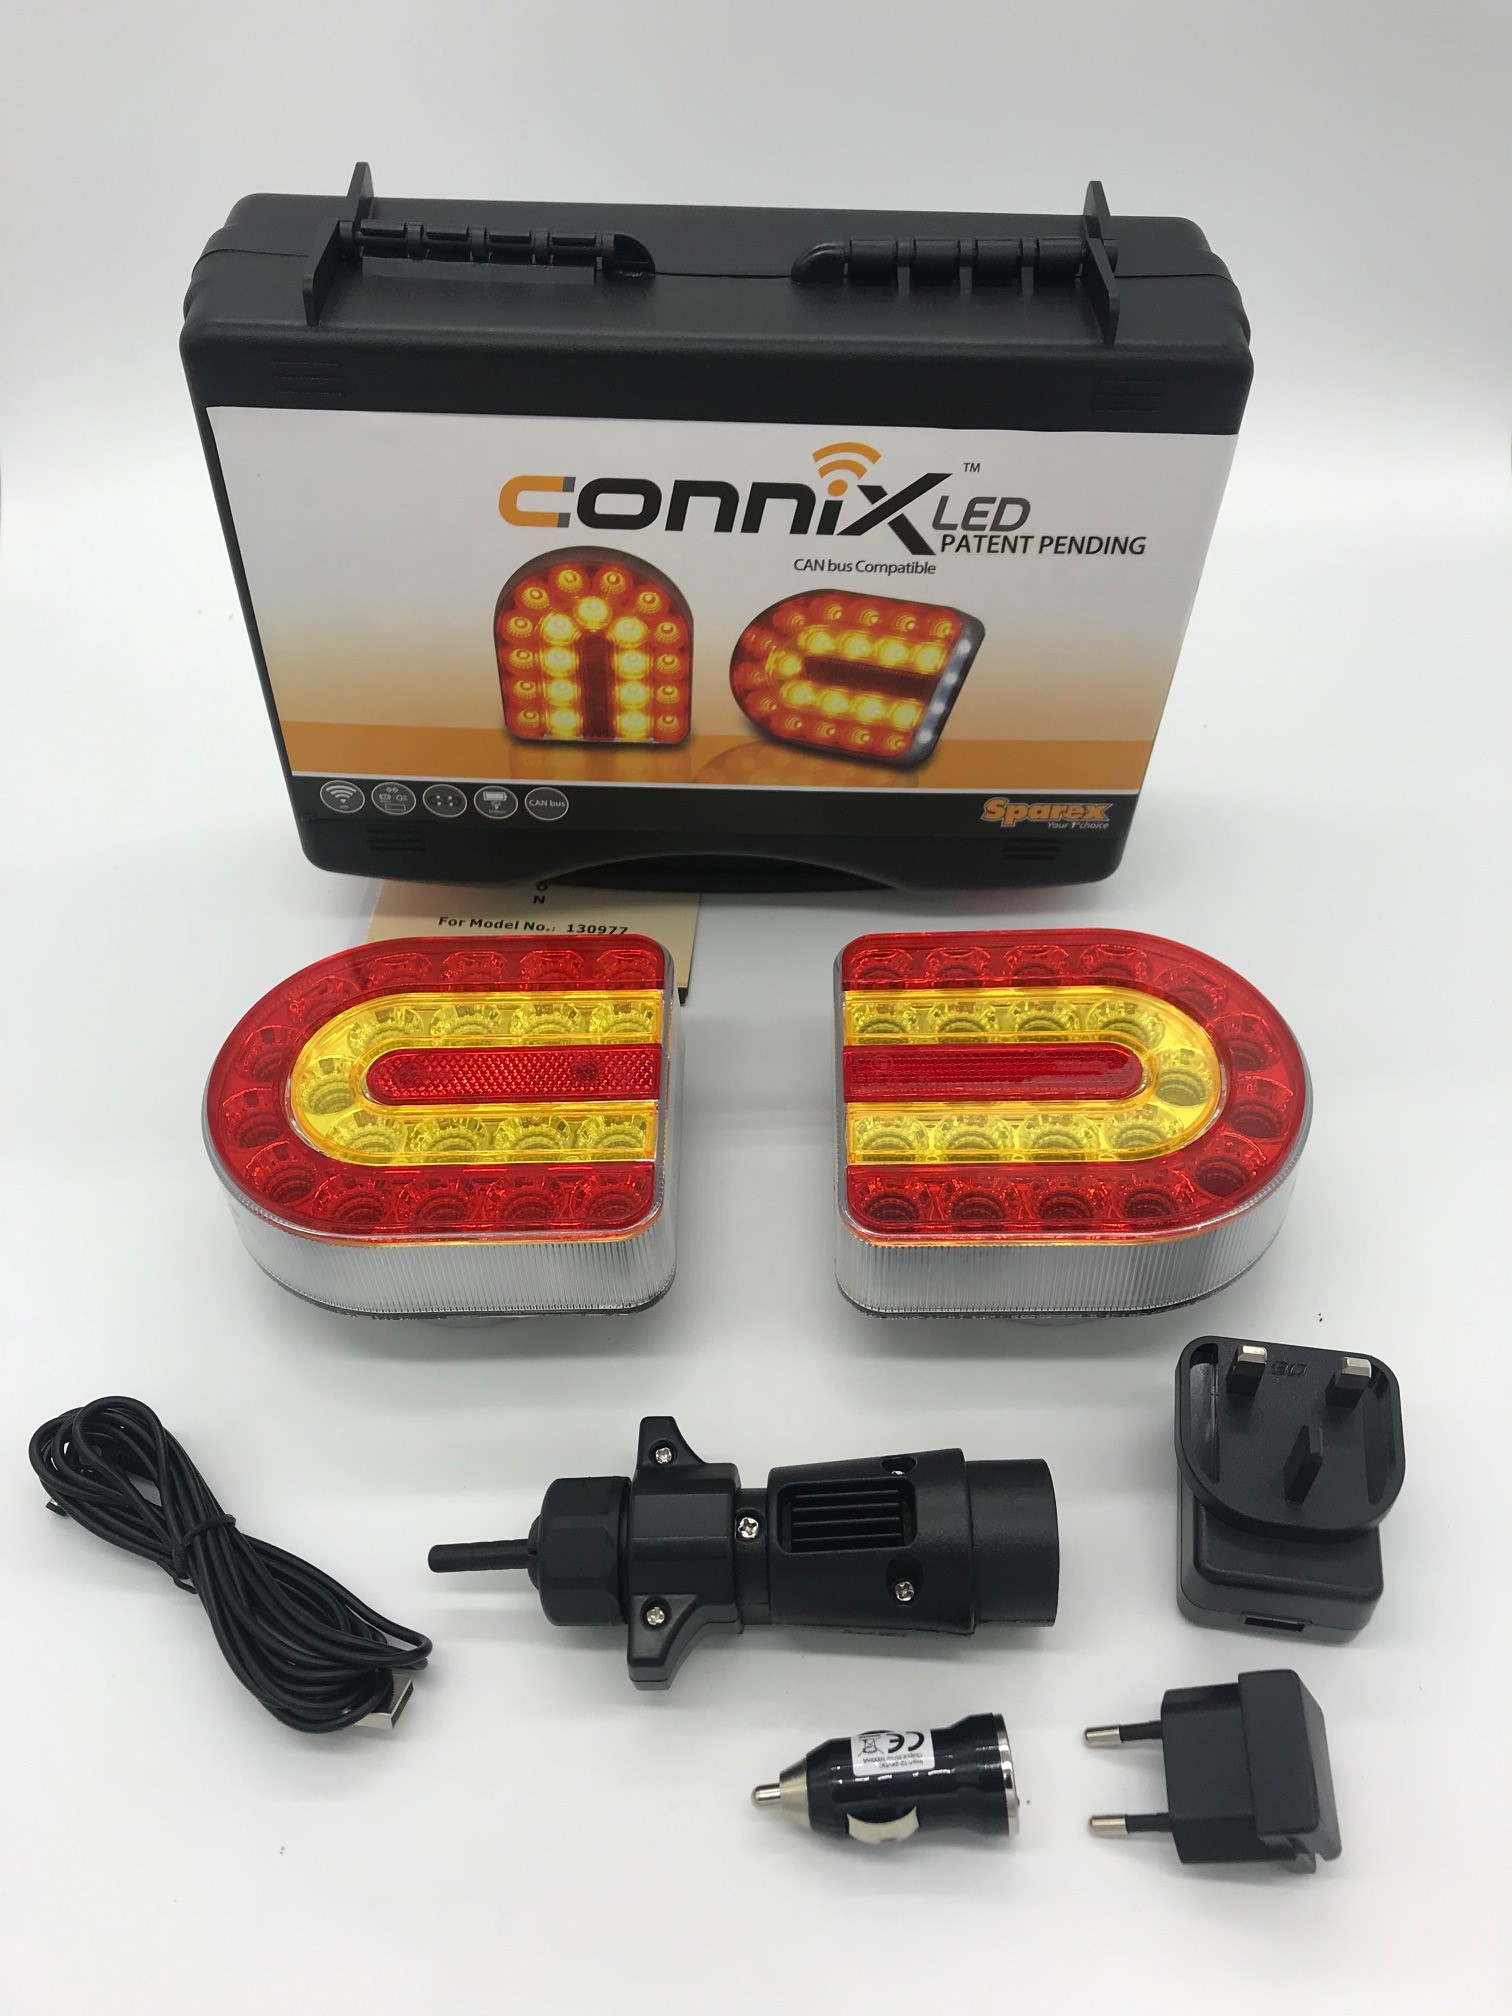 Connix CAN BUS fähig Leuchtensatz 24V kabellos Funk Magnet